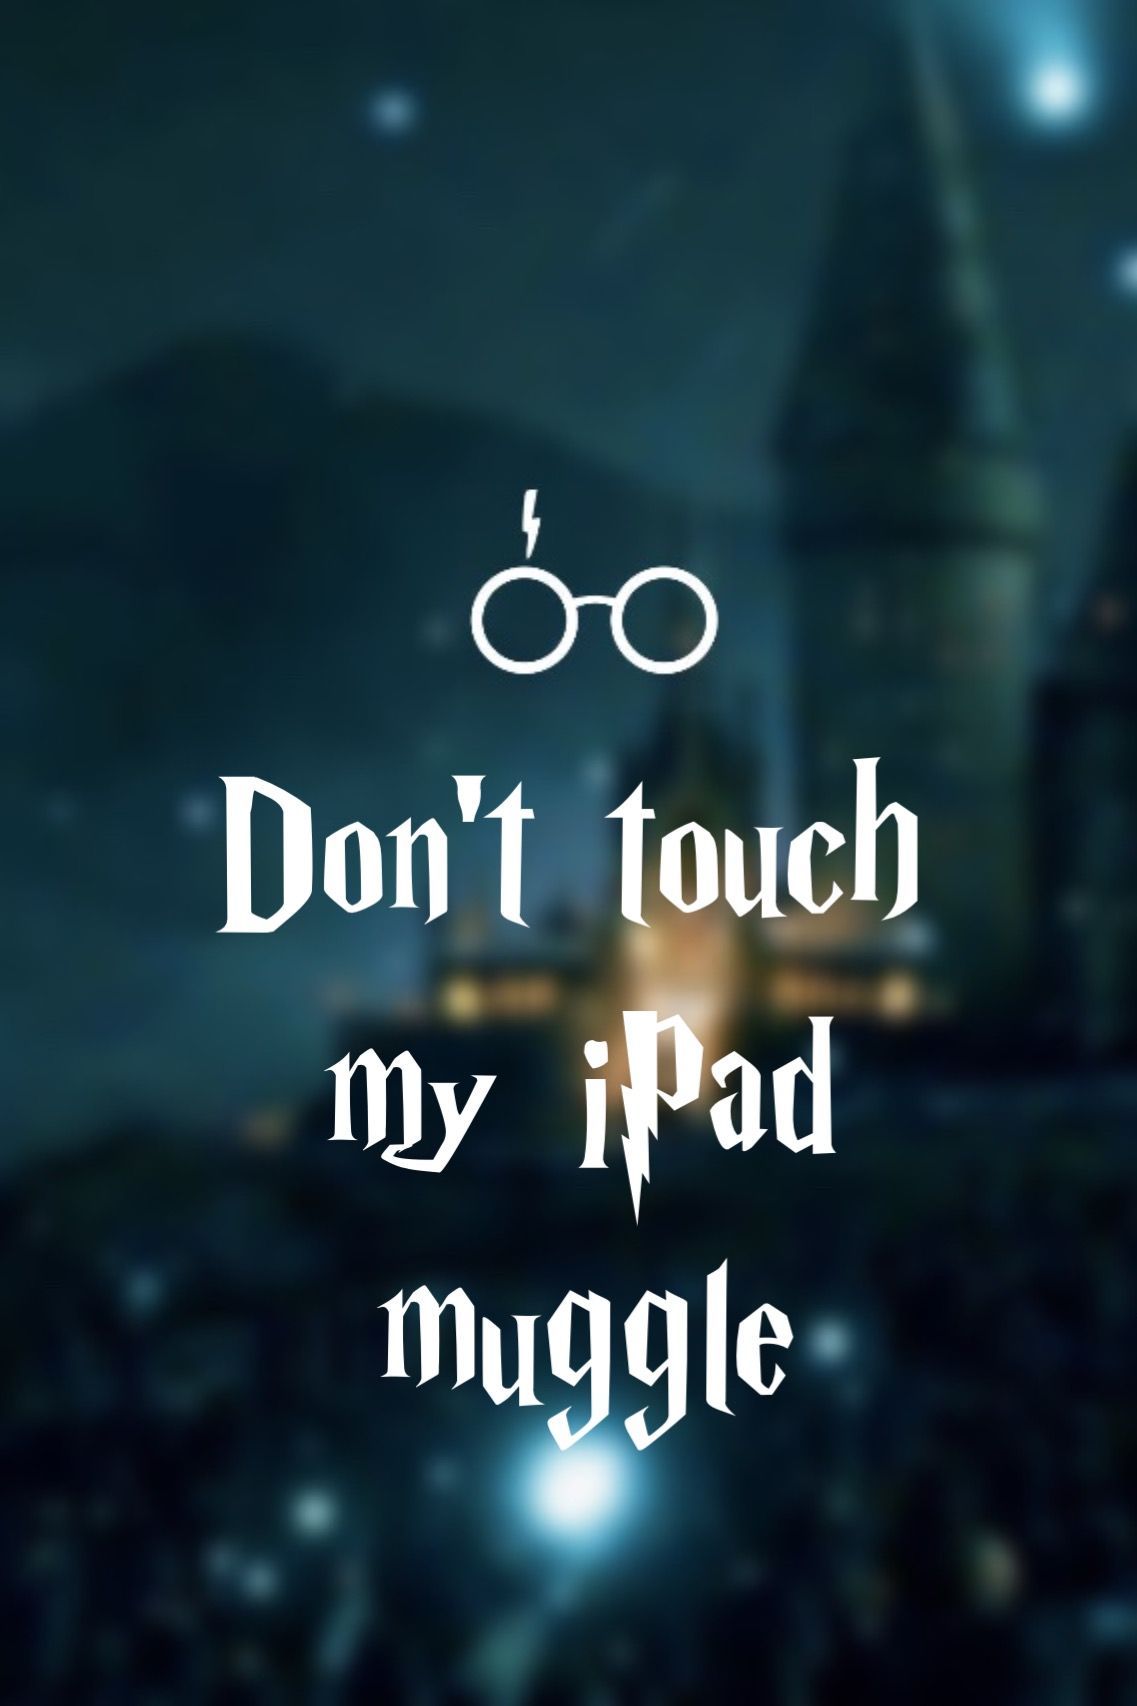 Don't touch my iPad muggle WALLPAPER #HarryPotter. Cool wallpaper for ipad, Harry potter iphone wallpaper, iPad pro wallpaper